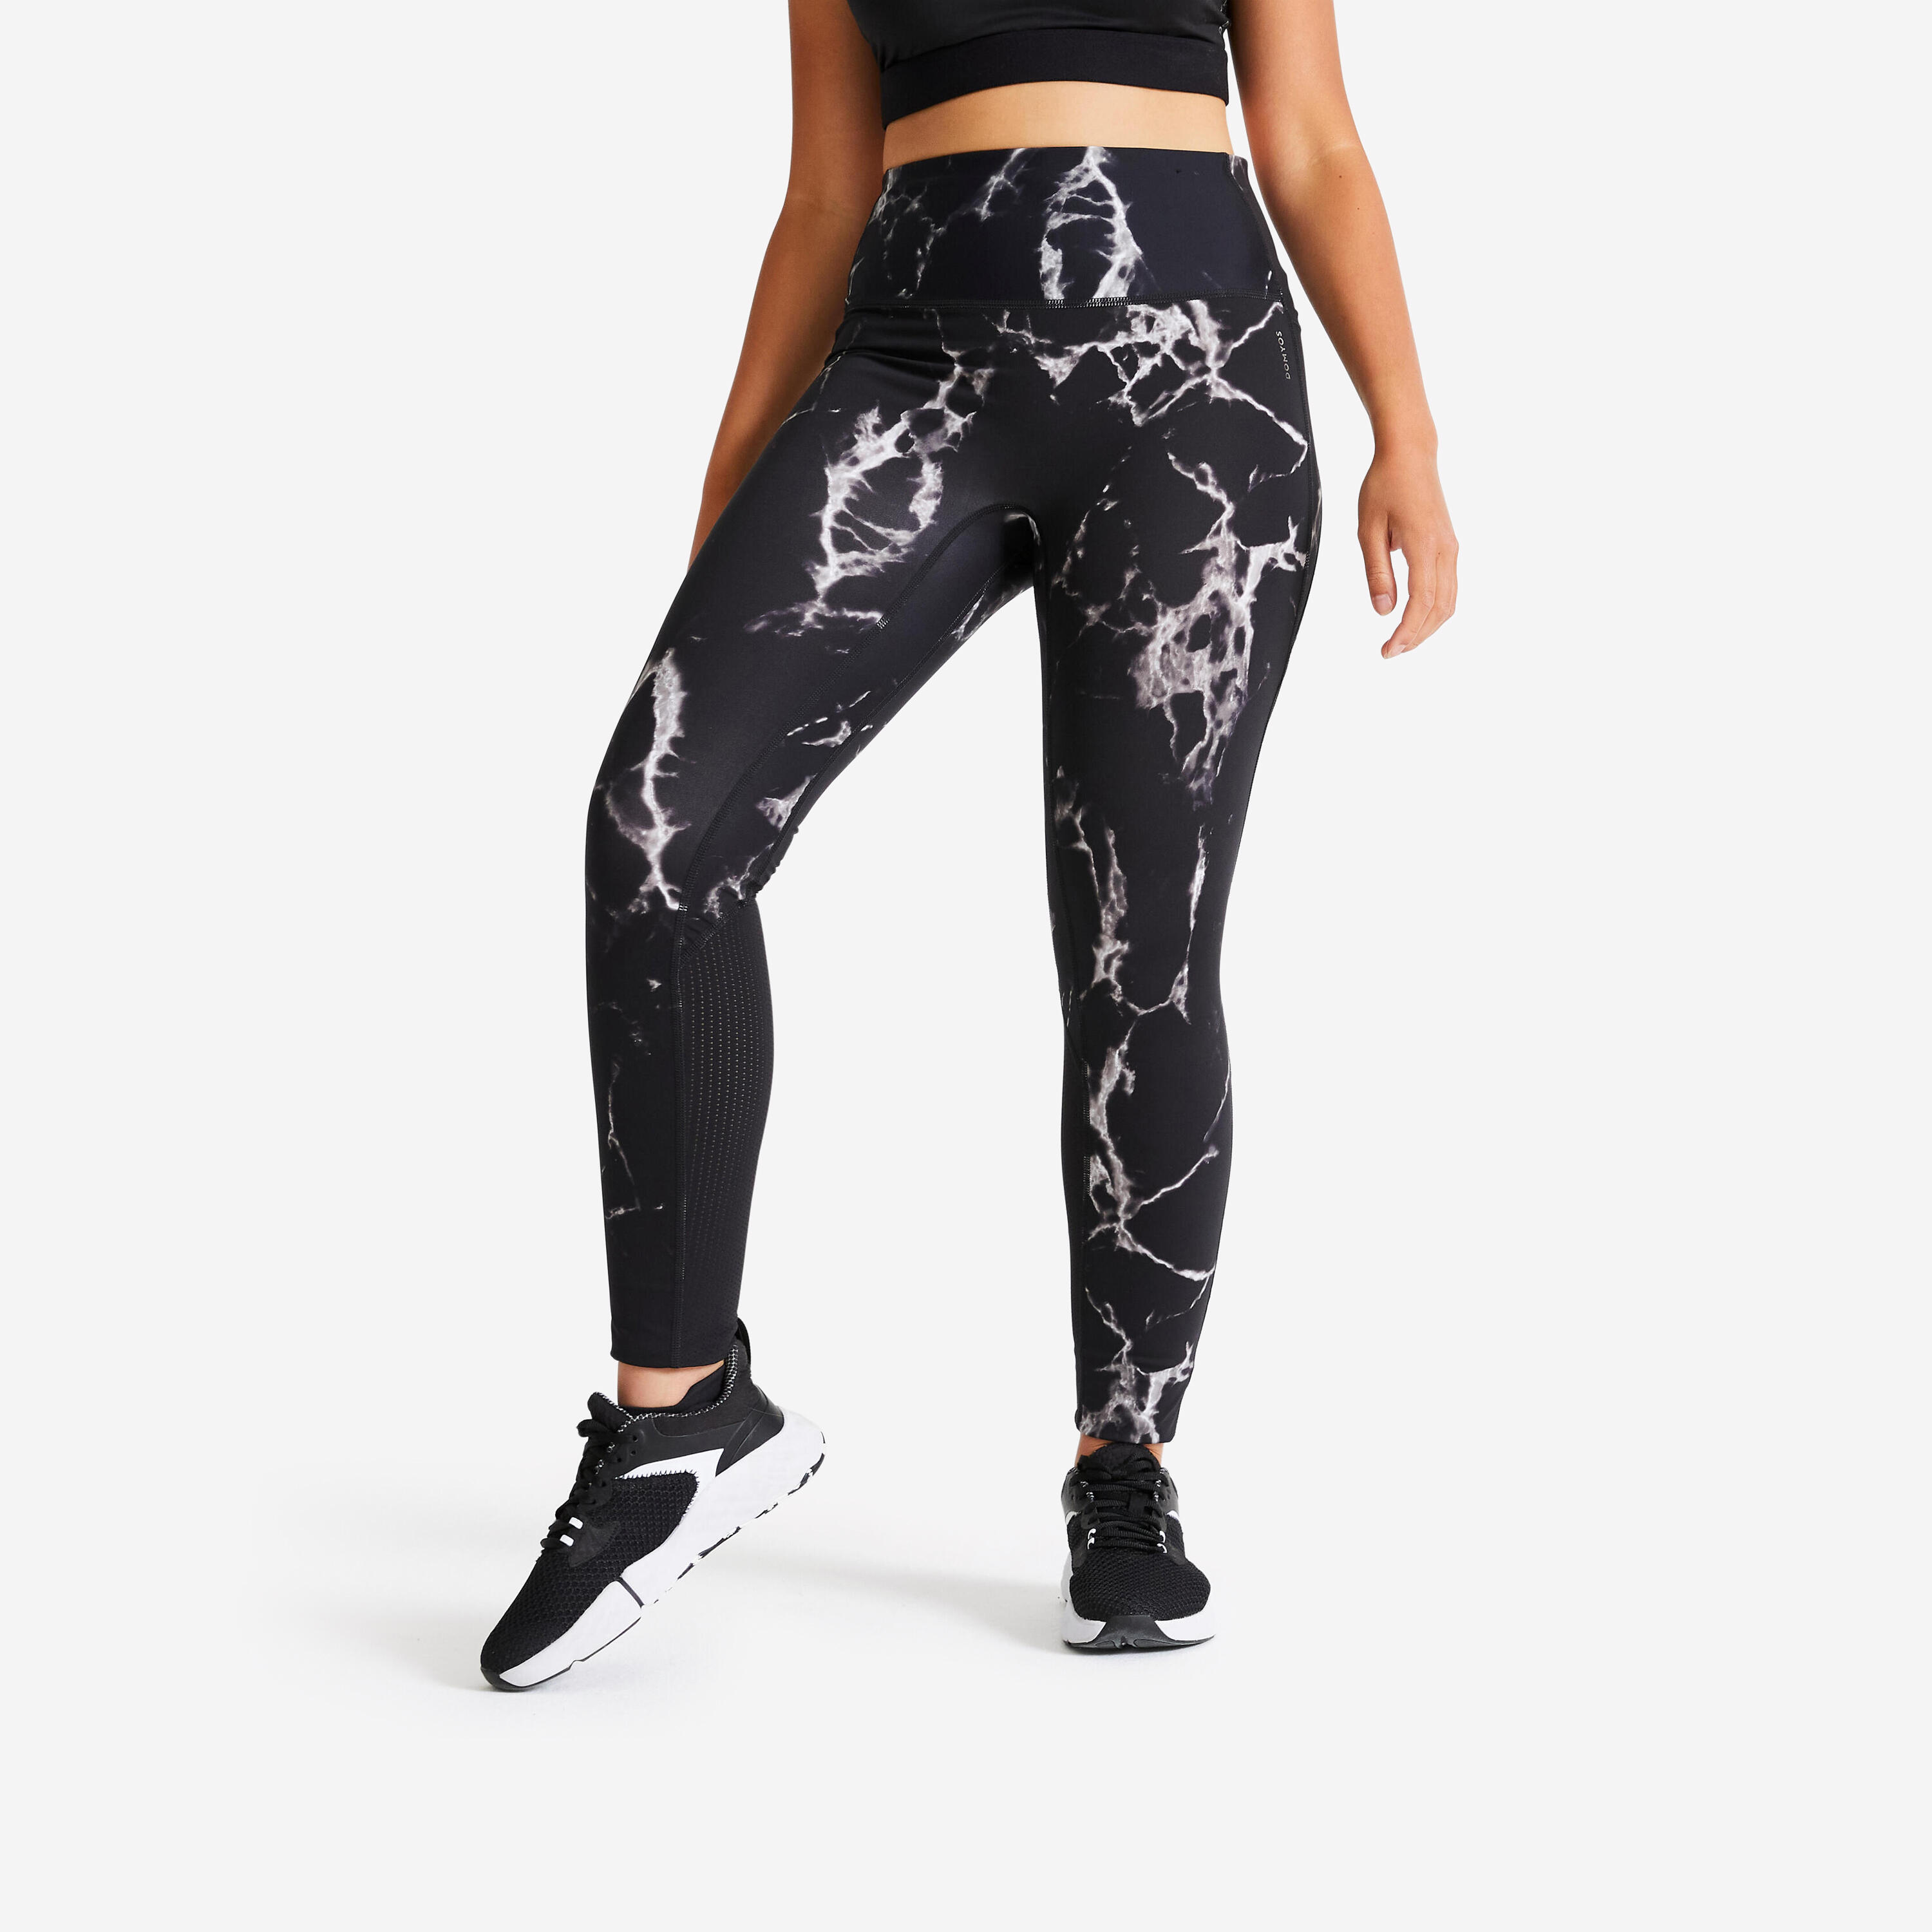 PRELOVED - Adidas marble print gym leggings. Size M